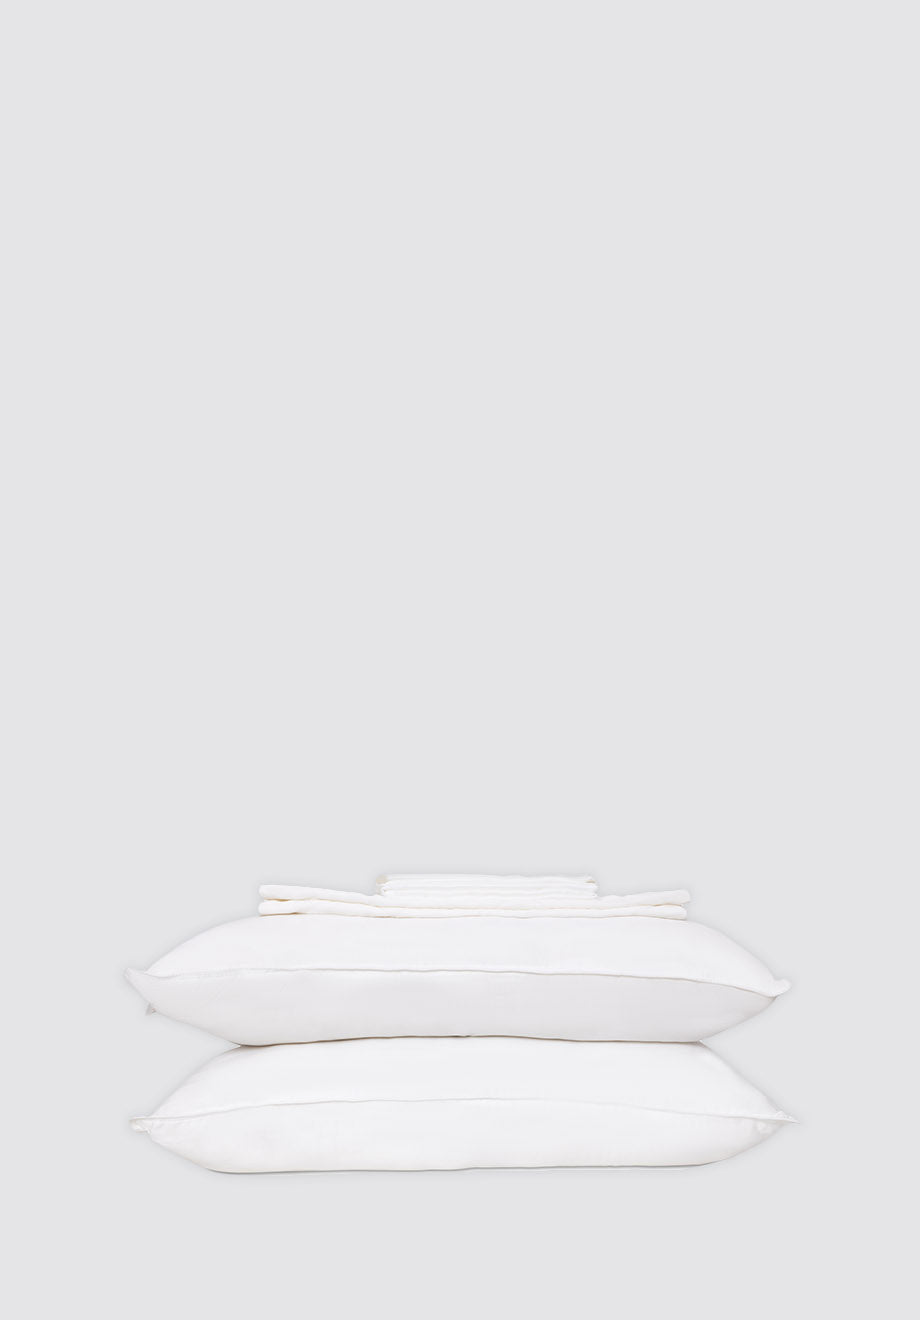 Sleepyhead Silk Pillow Set (Organic Eucalyptus & Bamboo)